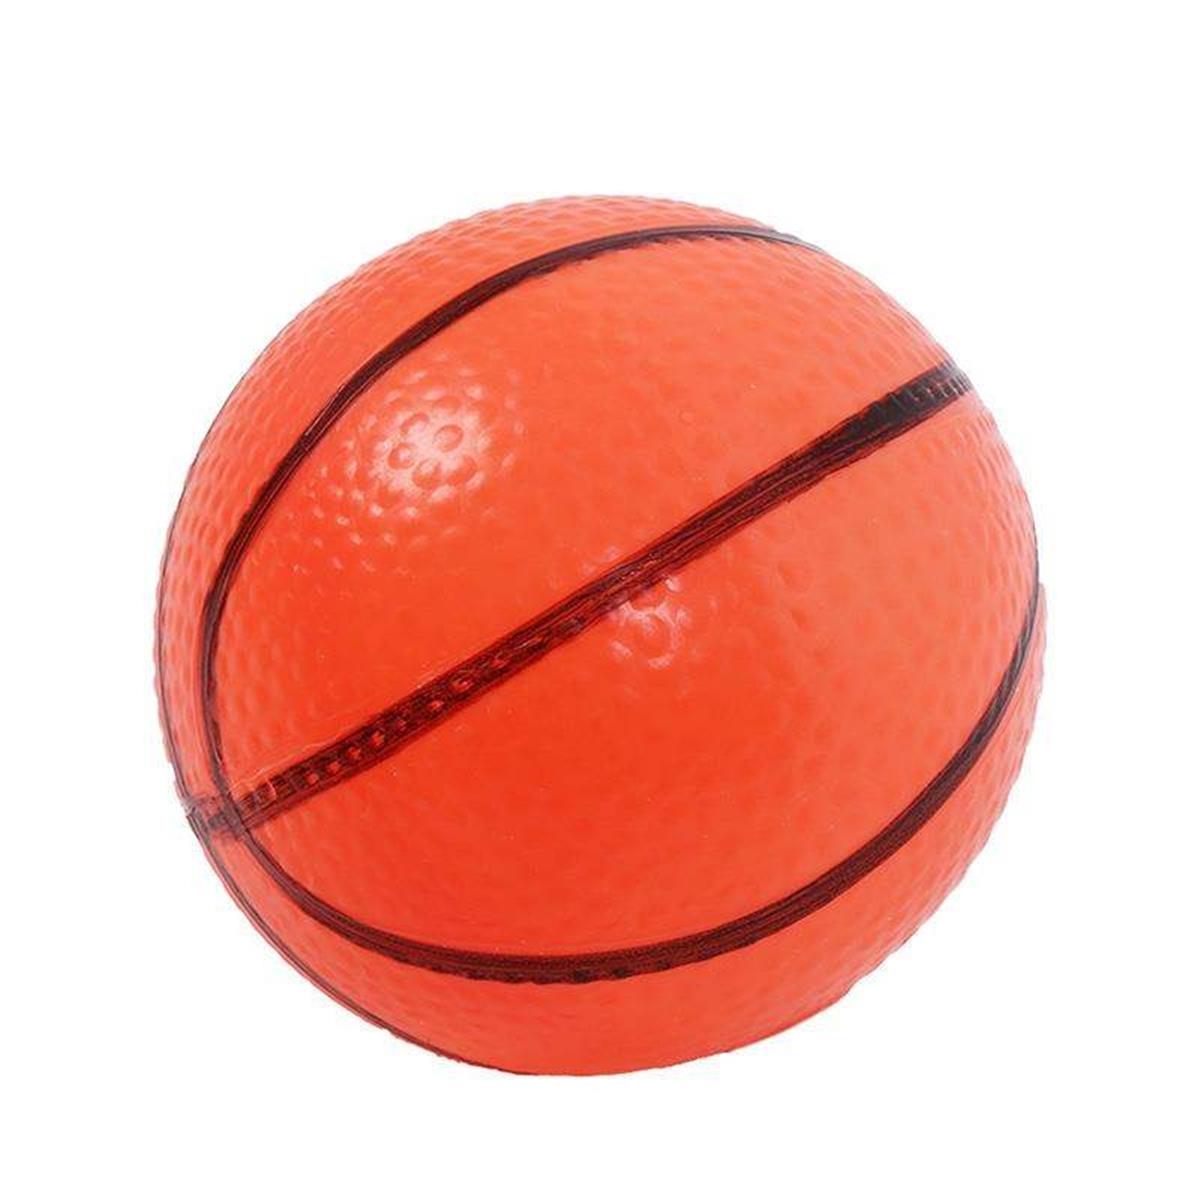 Ps23bk Magic Shot Basketball Hoop Set With Ball & Pump